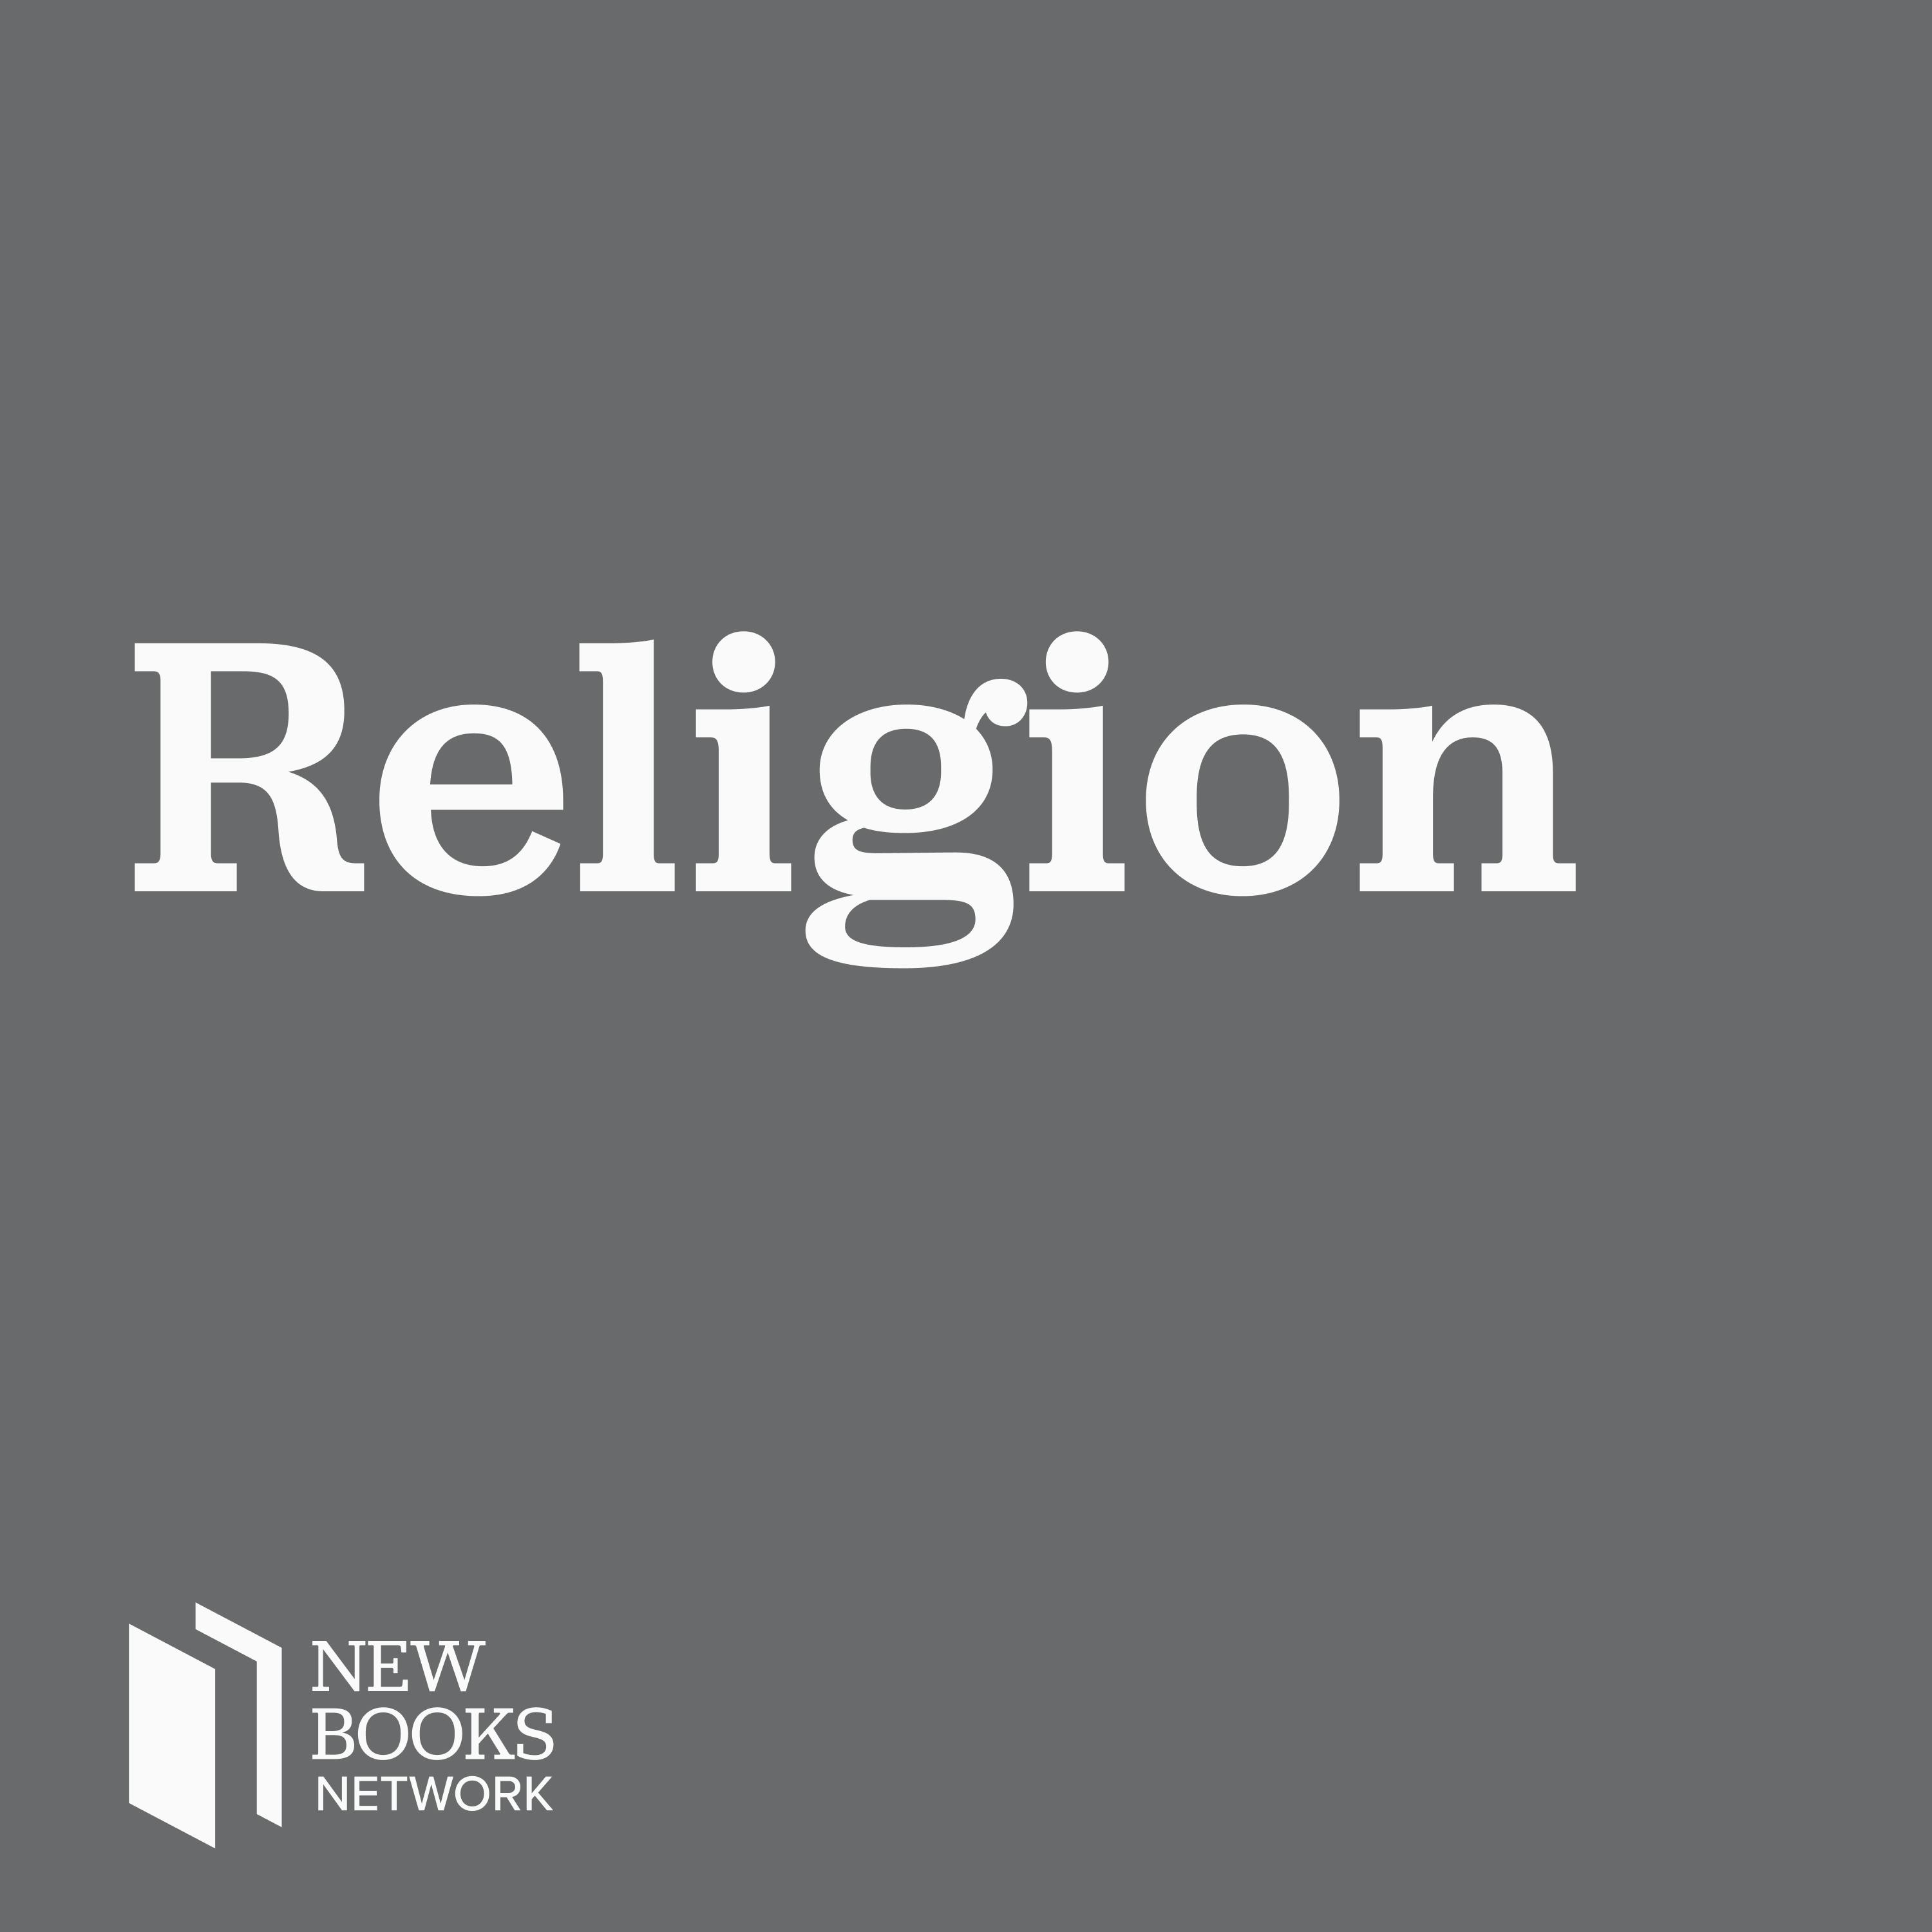 New Books in Religion - Podcast Addict